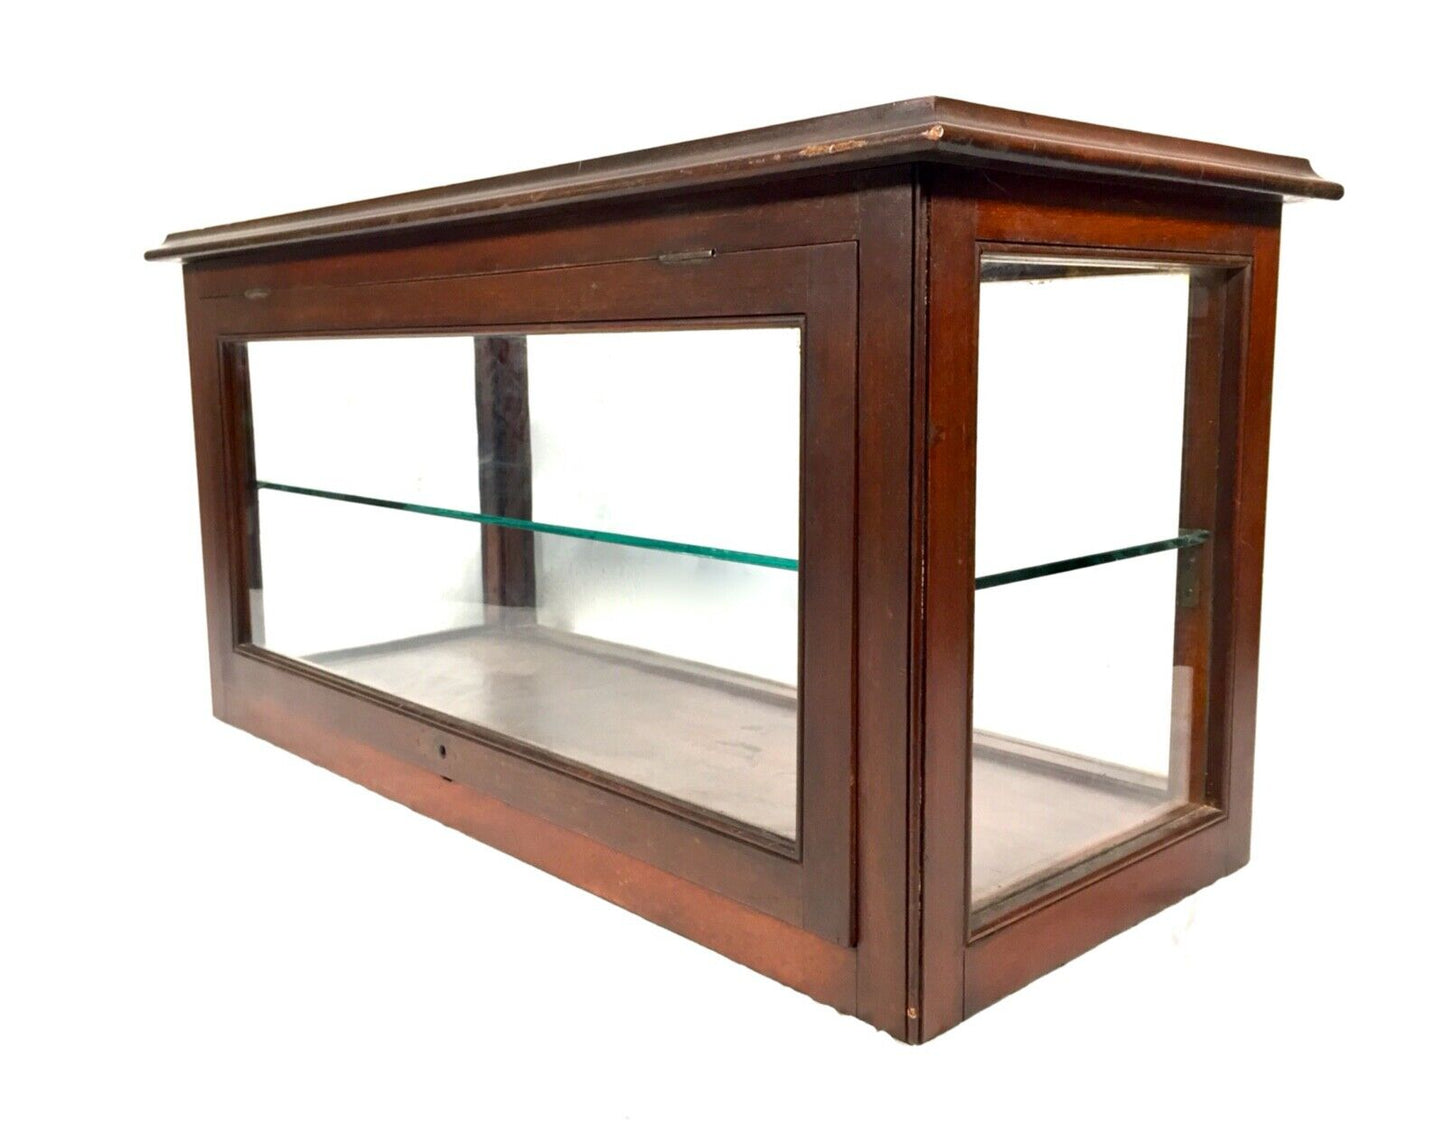 Antique Edwardian Large Wooden & Glazed Tabletop Shop Display Cabinet Showcase